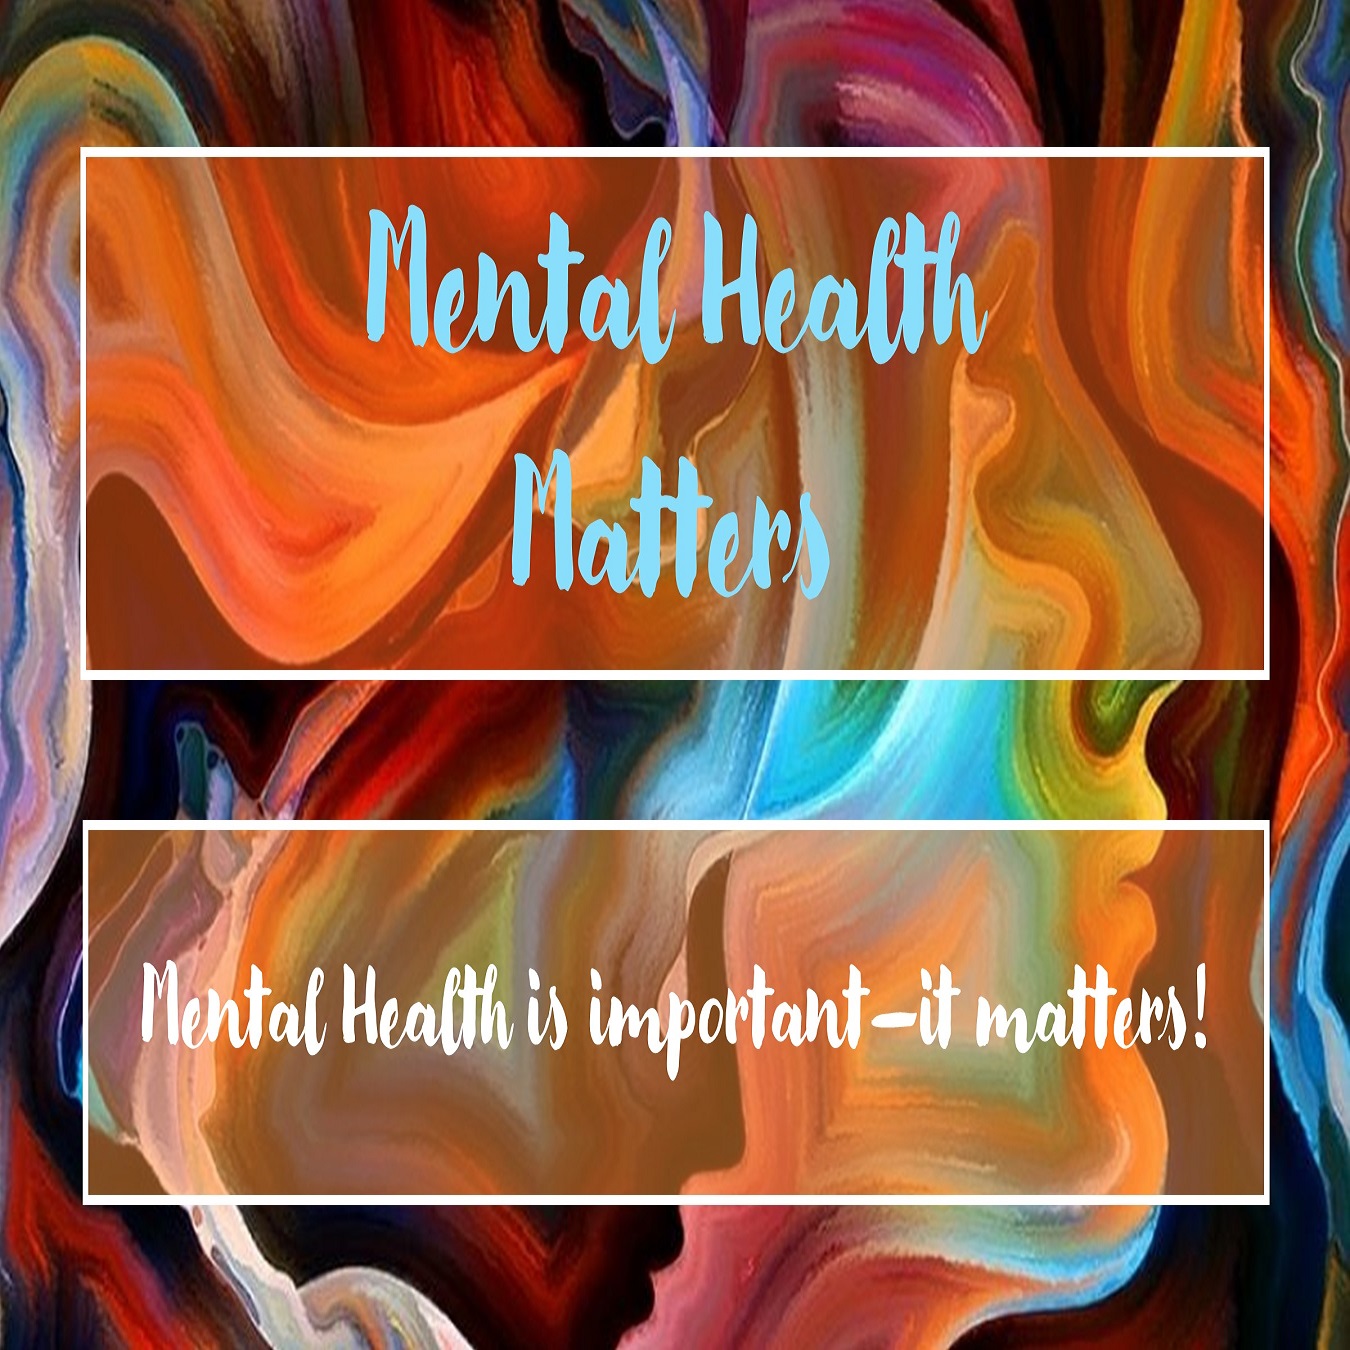 Mental Health Matters – resources & encouragement